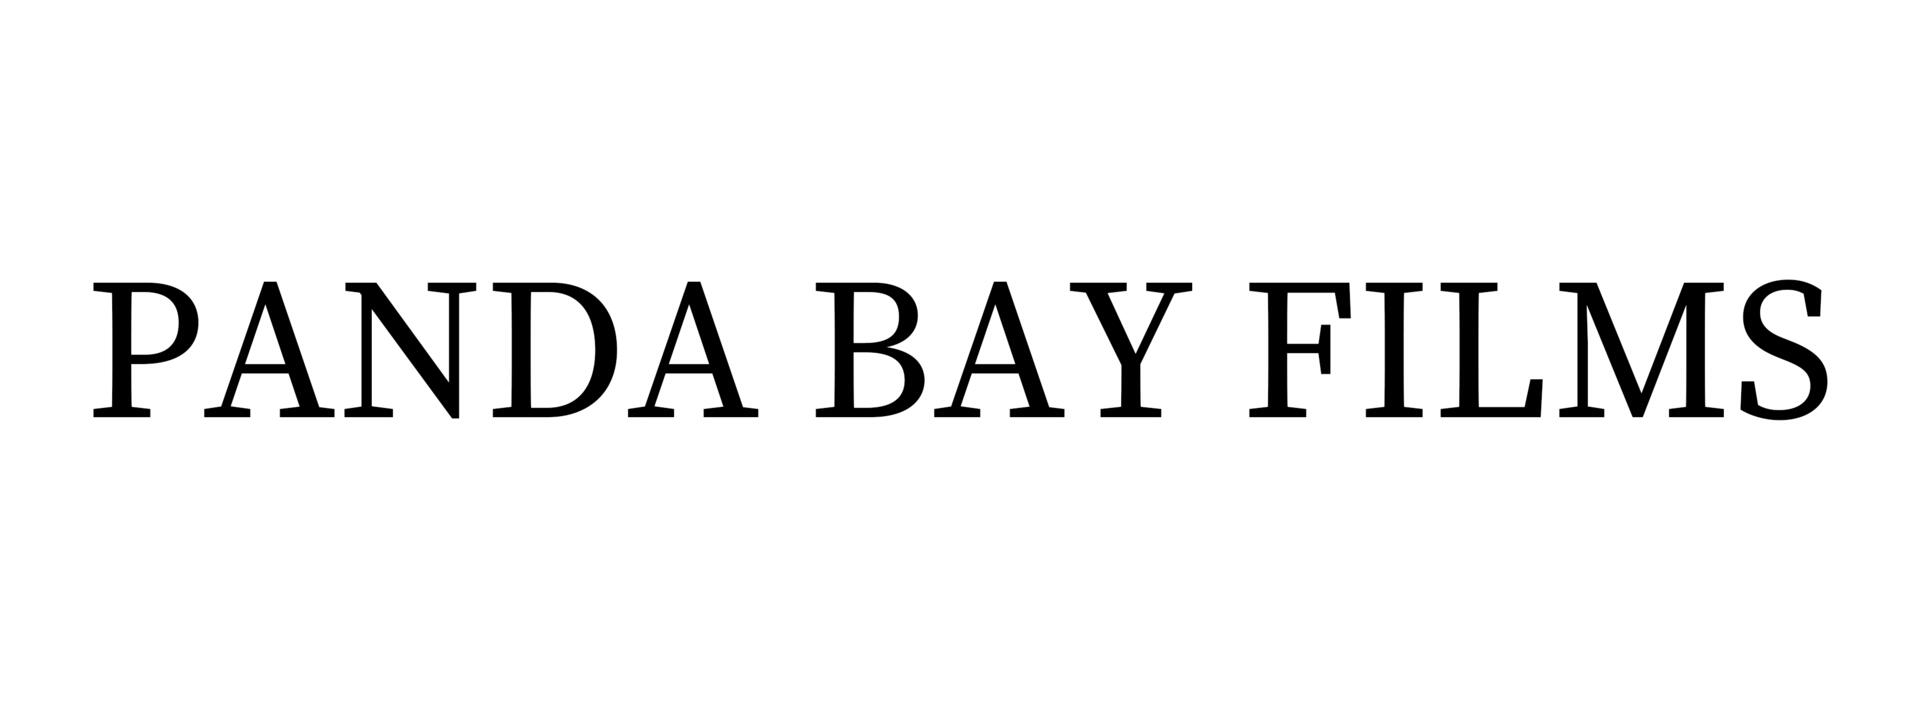 pandabayfilms-profile-logo.jpg